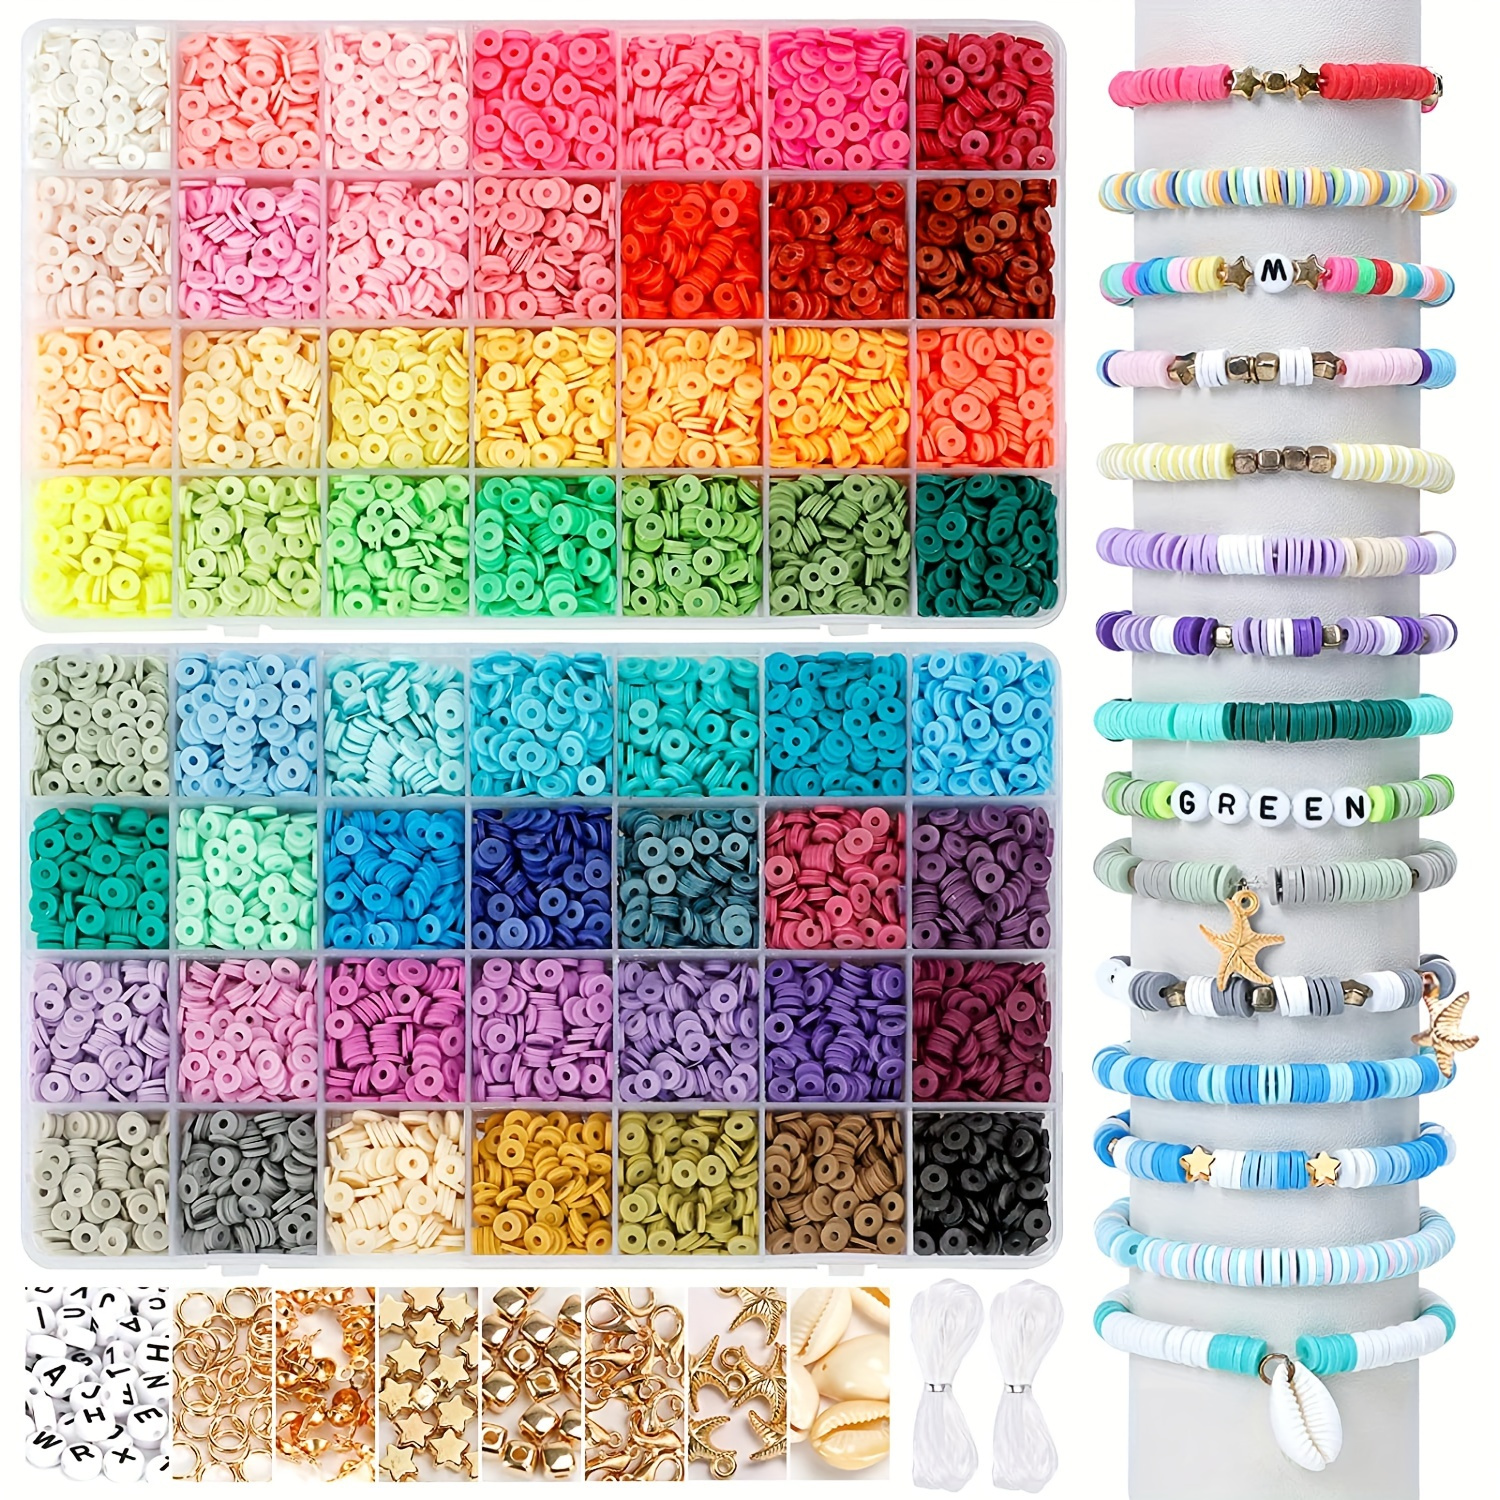  chfine 8400Pcs Clay Beads Bracelet Making Kit, 56